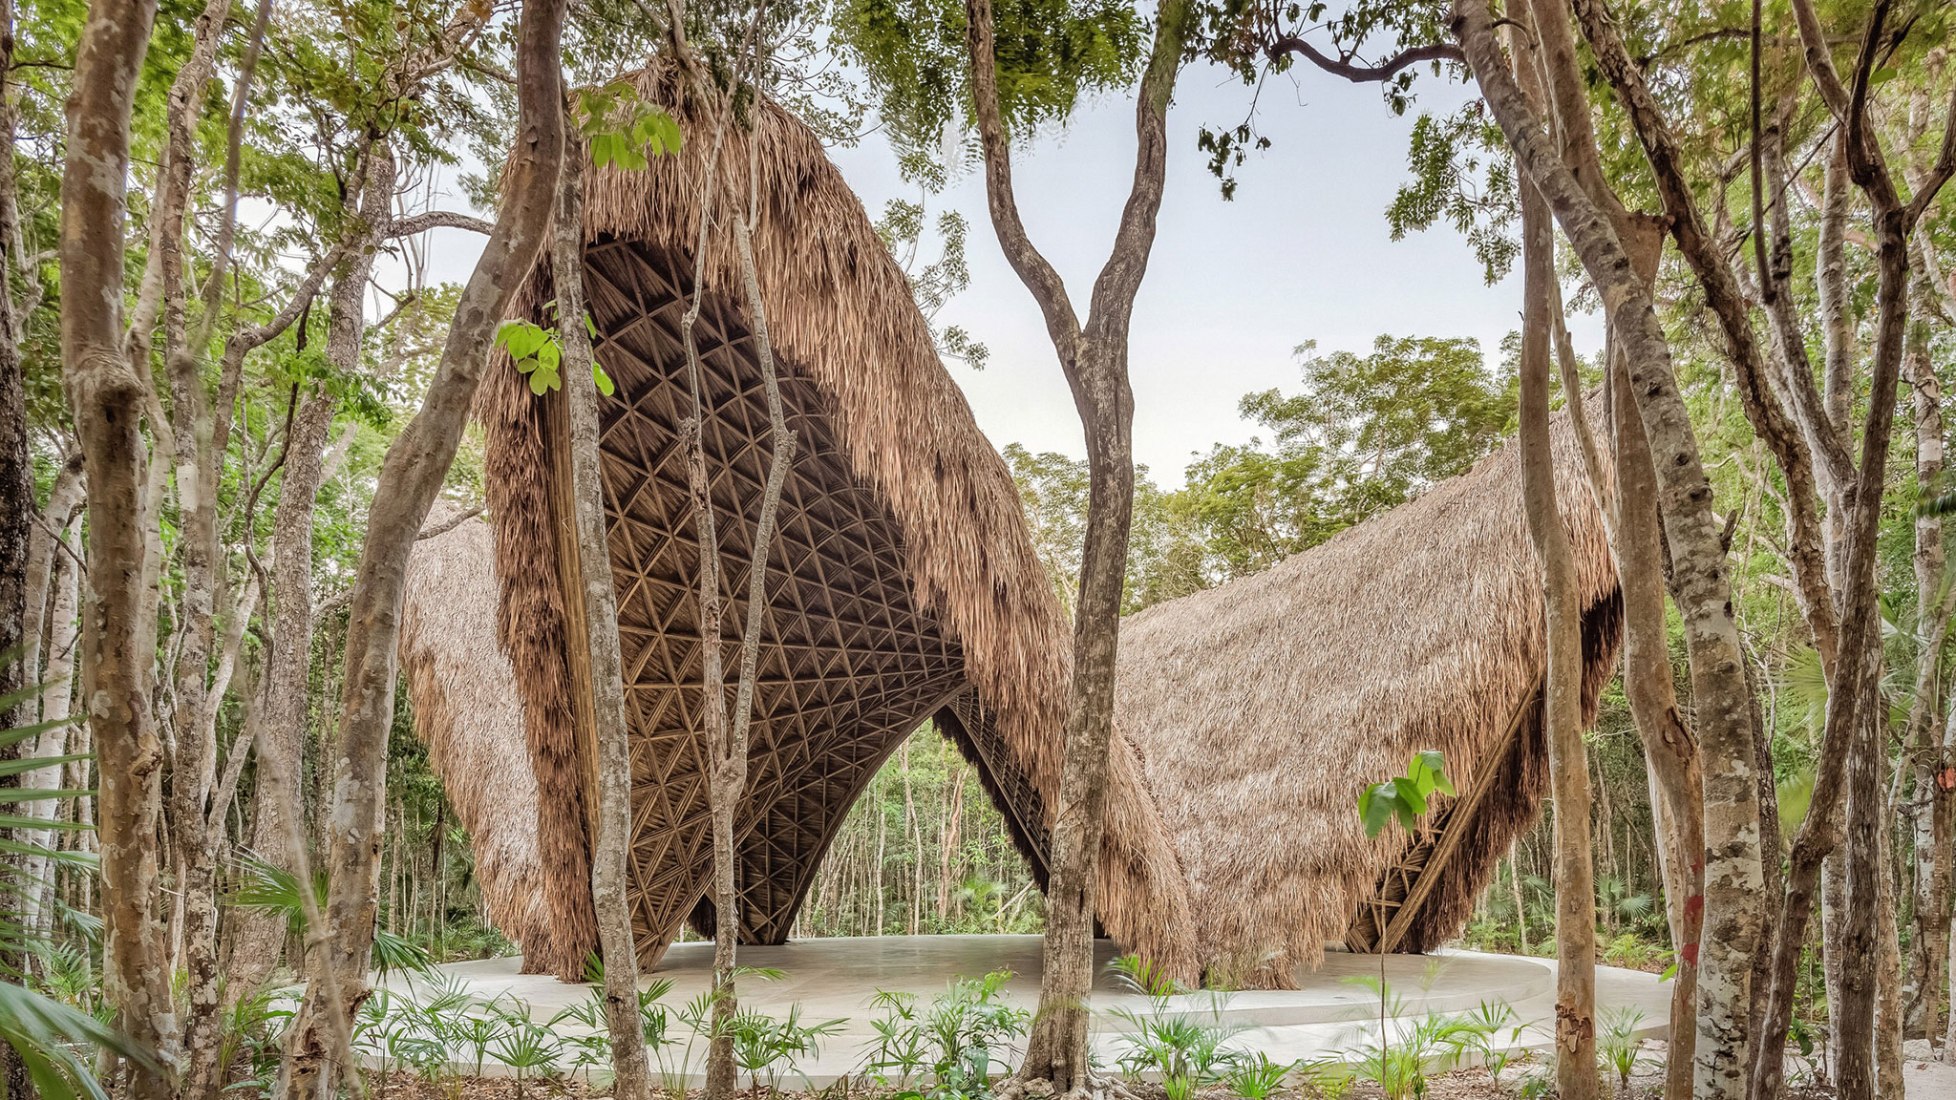 Amazing bamboo yoga pavilion by CO-LAB Design Office